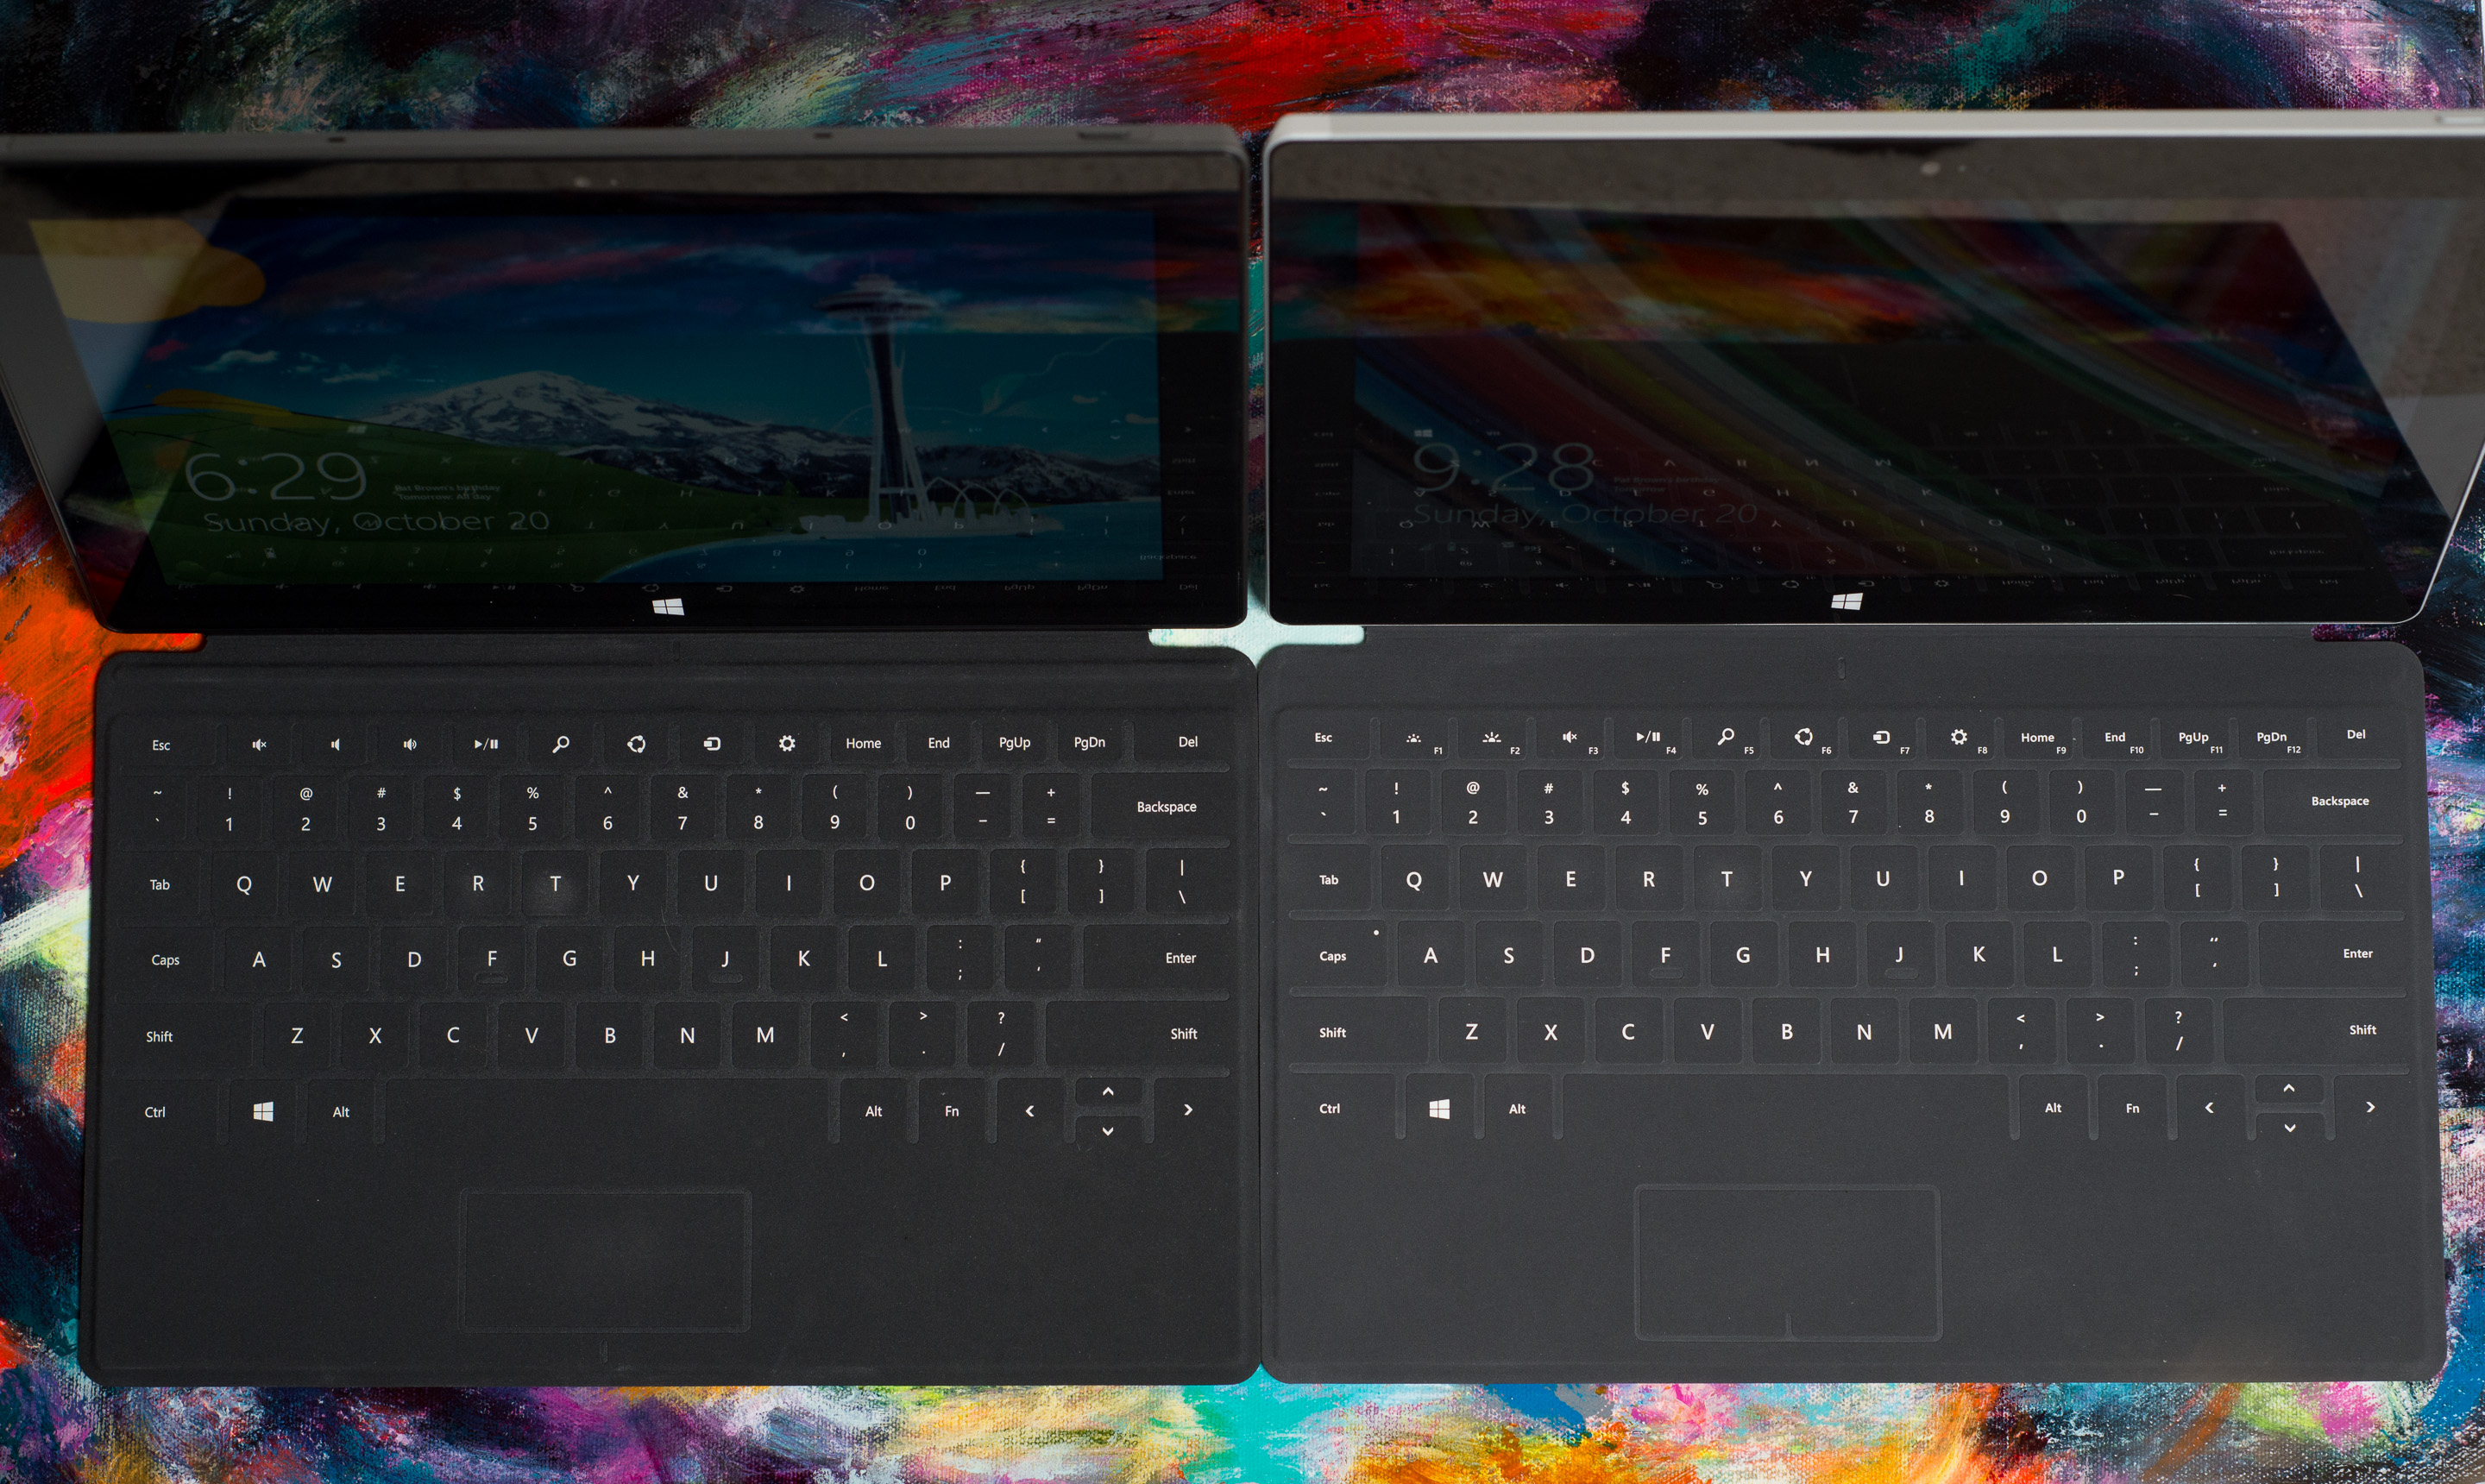 Microsoft Surface Pro 2 - 128GB, Haswell i5 Processor, 10.6 Full